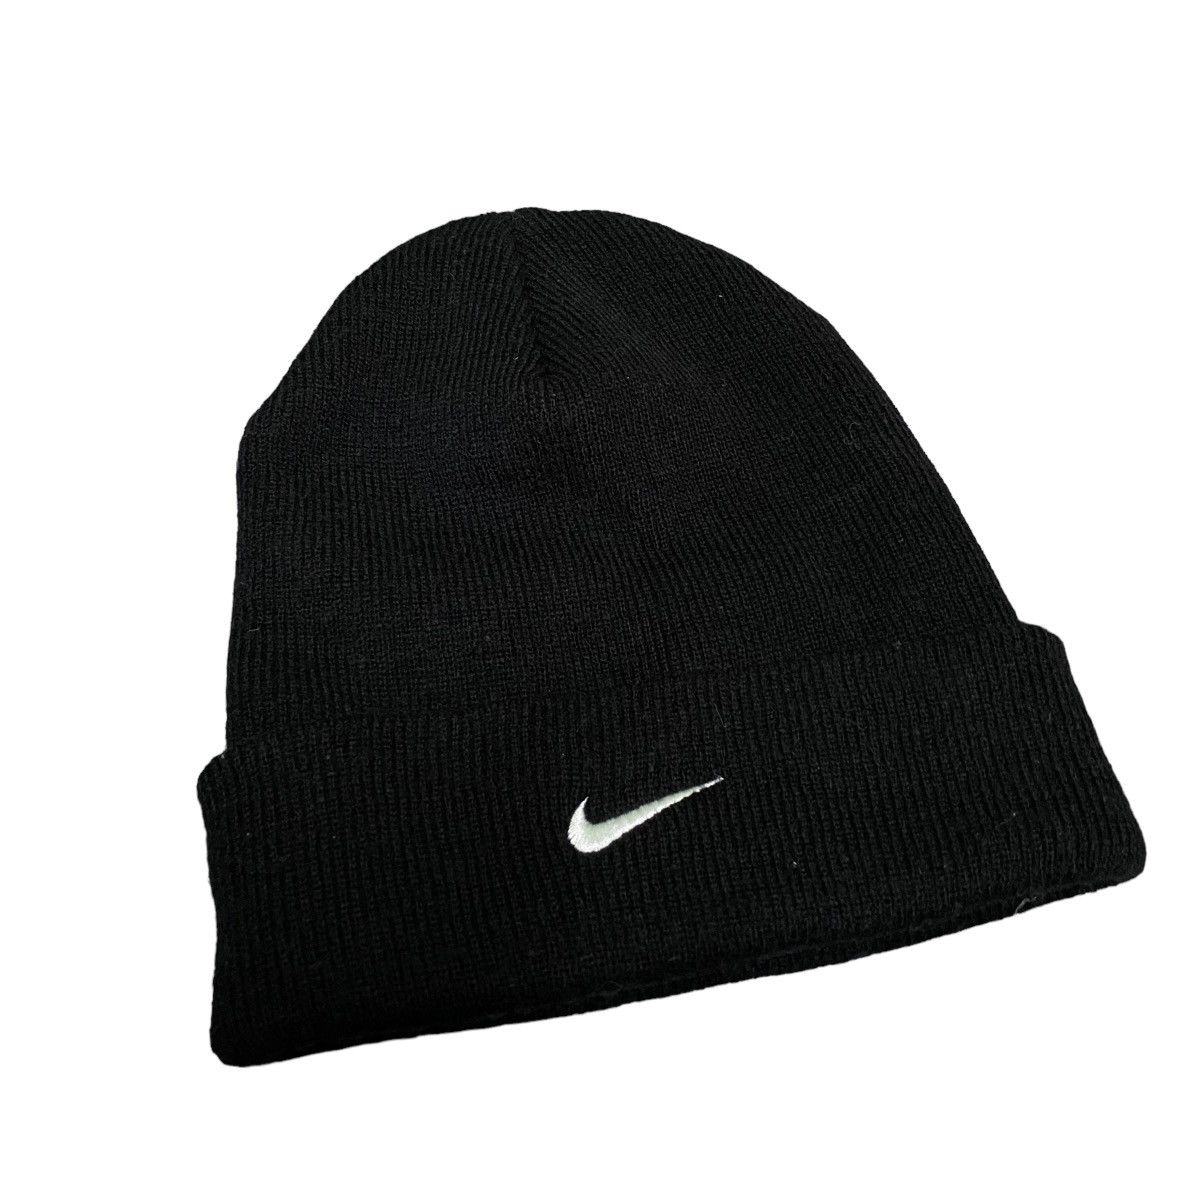 Vintage Nike Beanie Hat Black Colour - 5